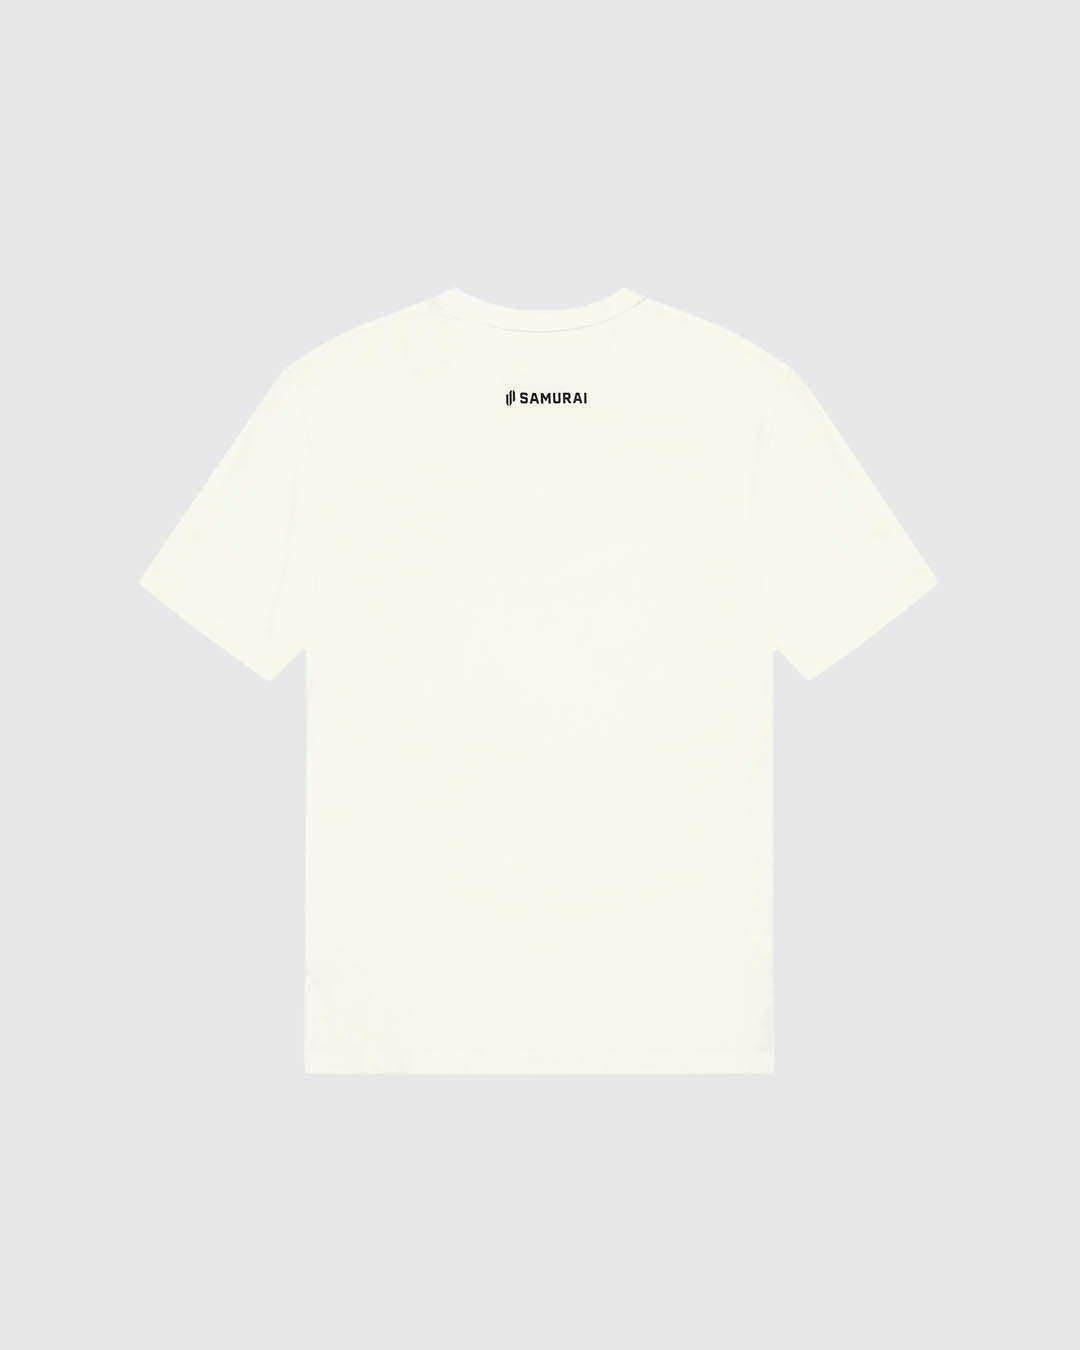 ED7:08 - Don't Drop It T-Shirt - Off-White